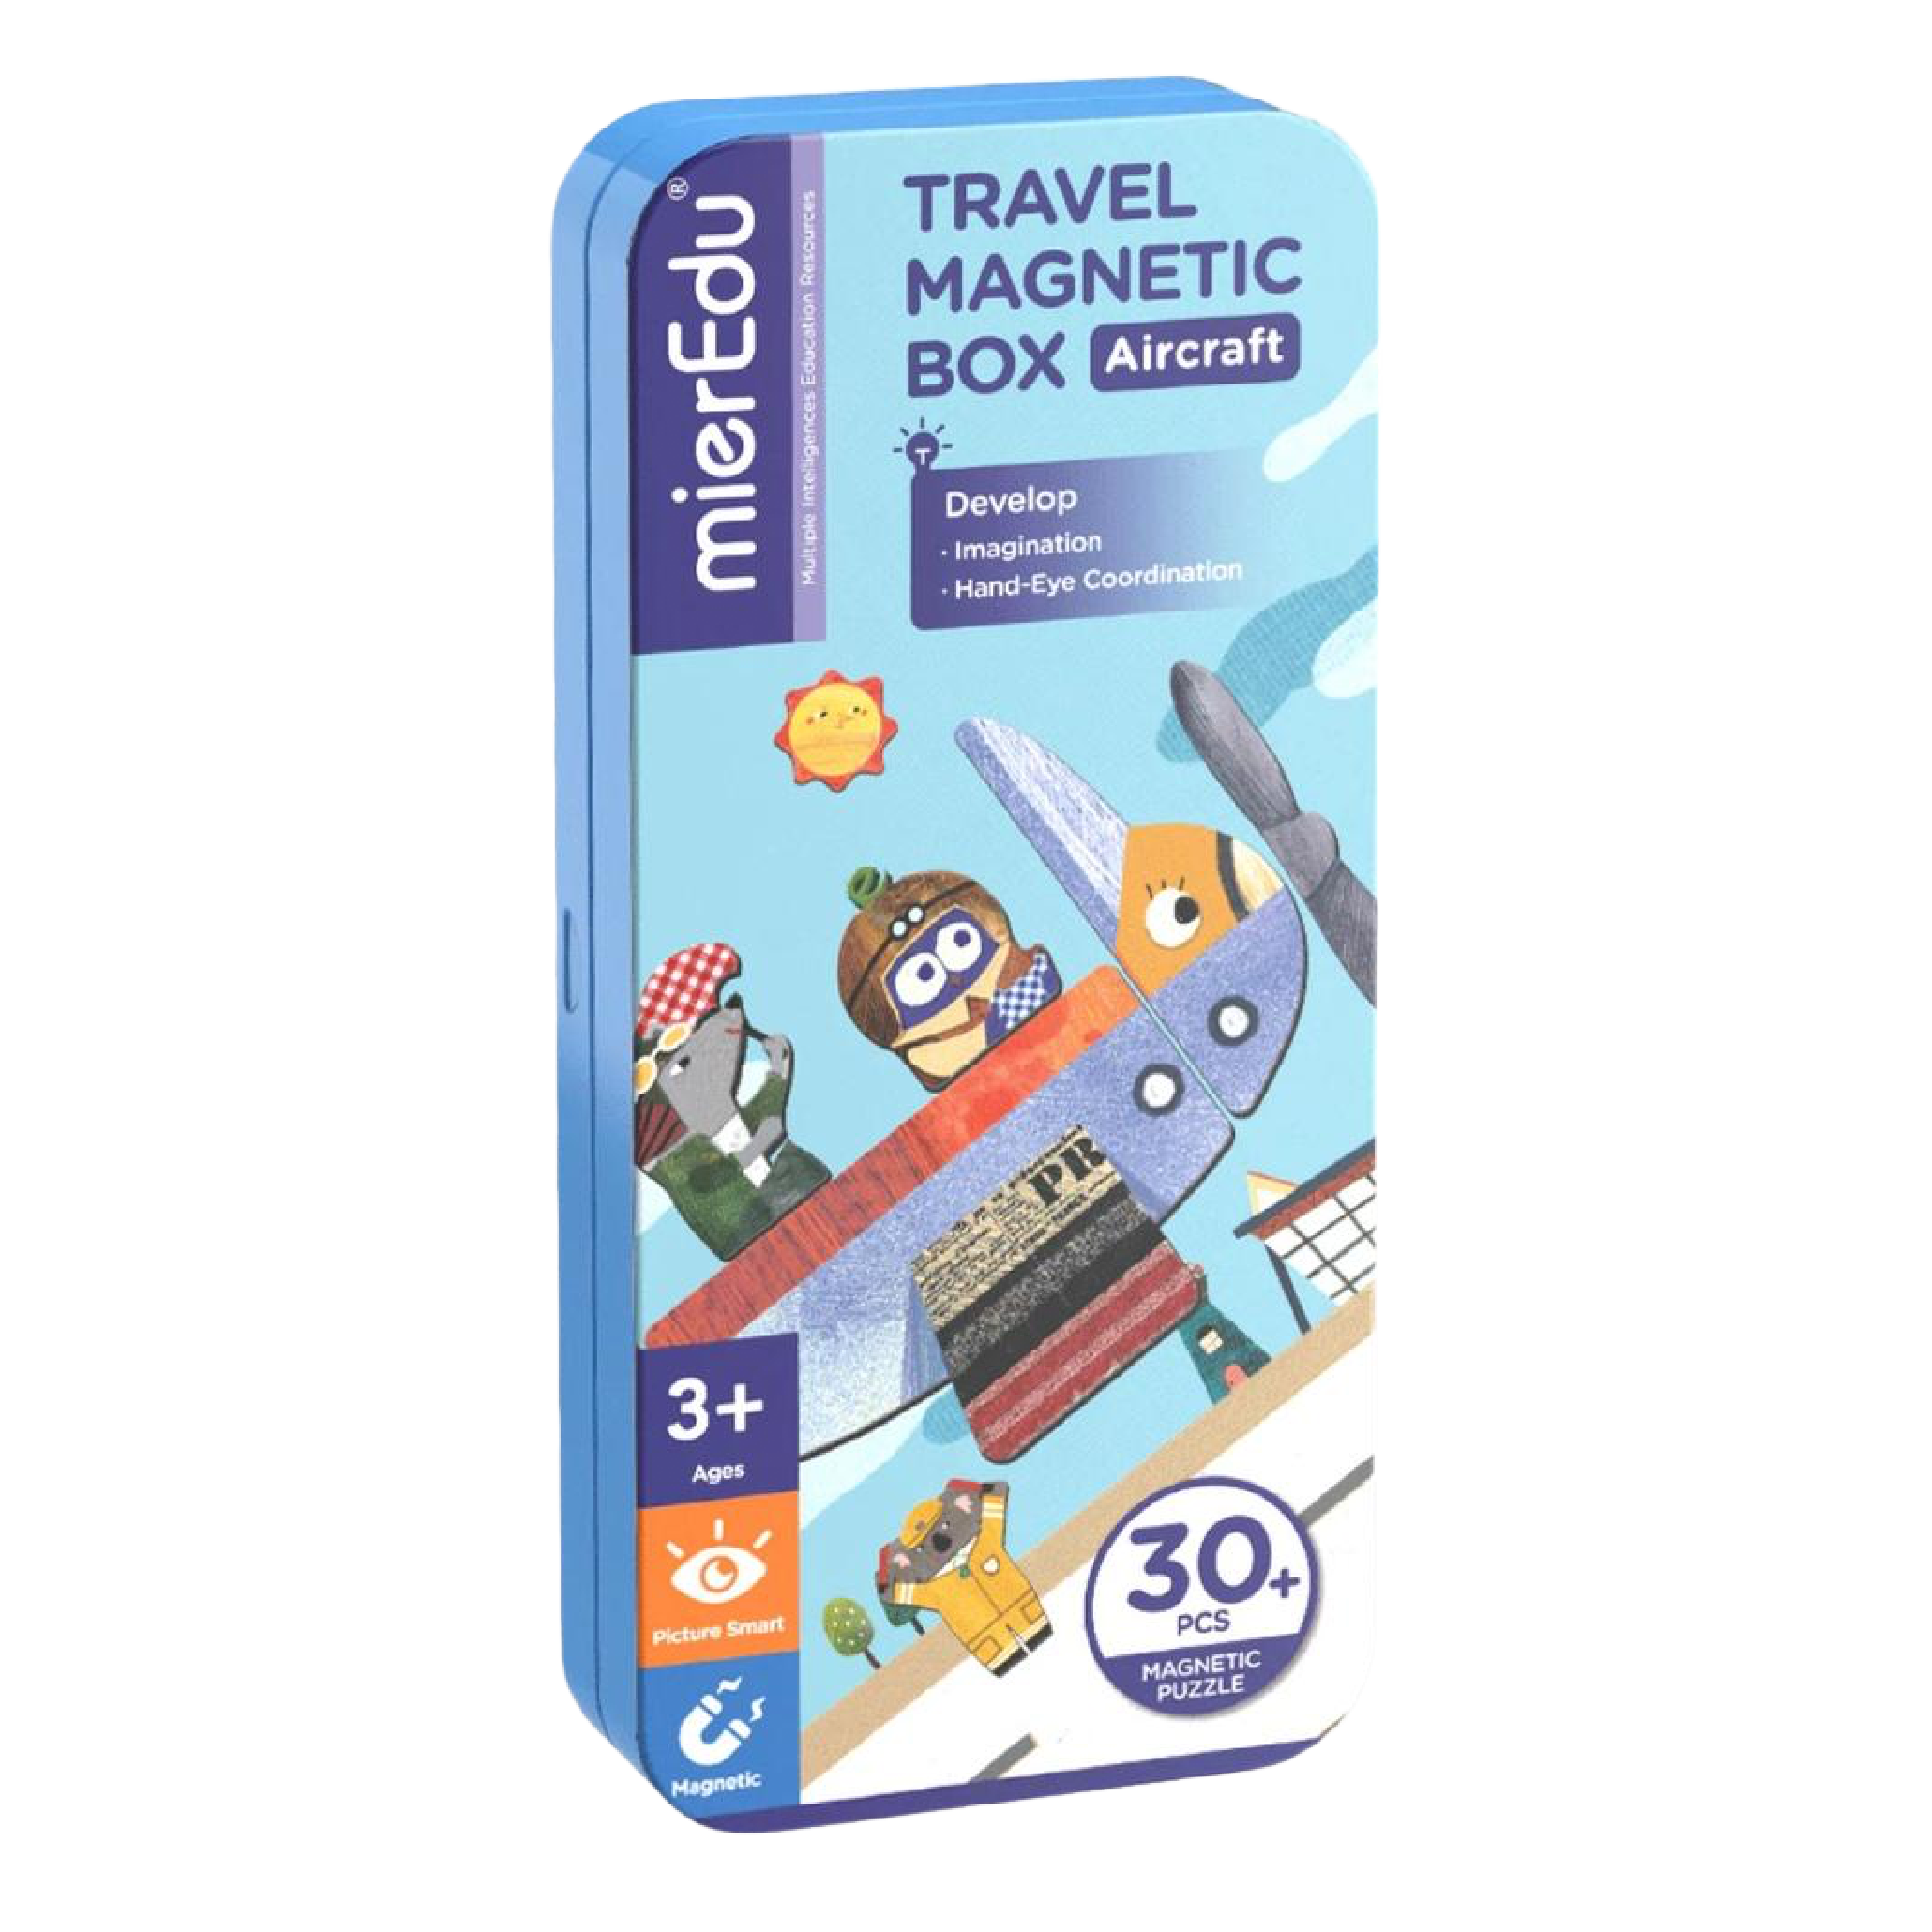 mierEdu | Magnetic Travel Box - Aircraft